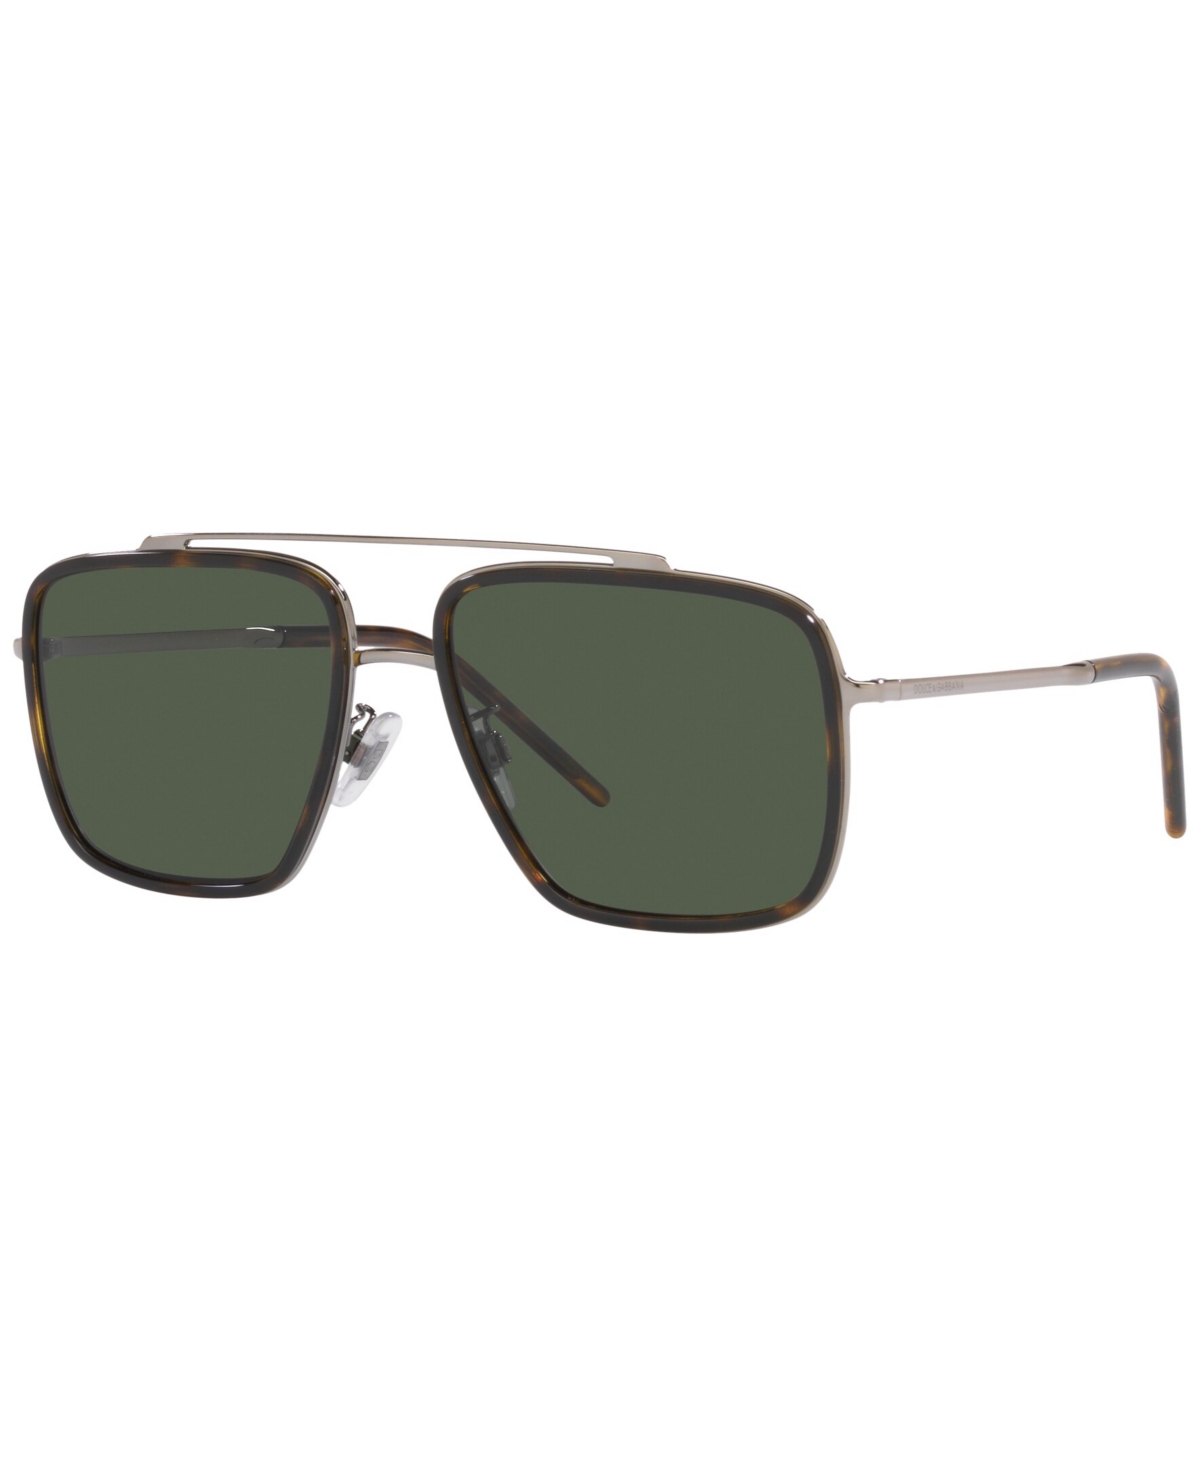 Dolce&Gabbana Polarized Sunglasses, DG2220 - Bronze/Havana/Green Solid